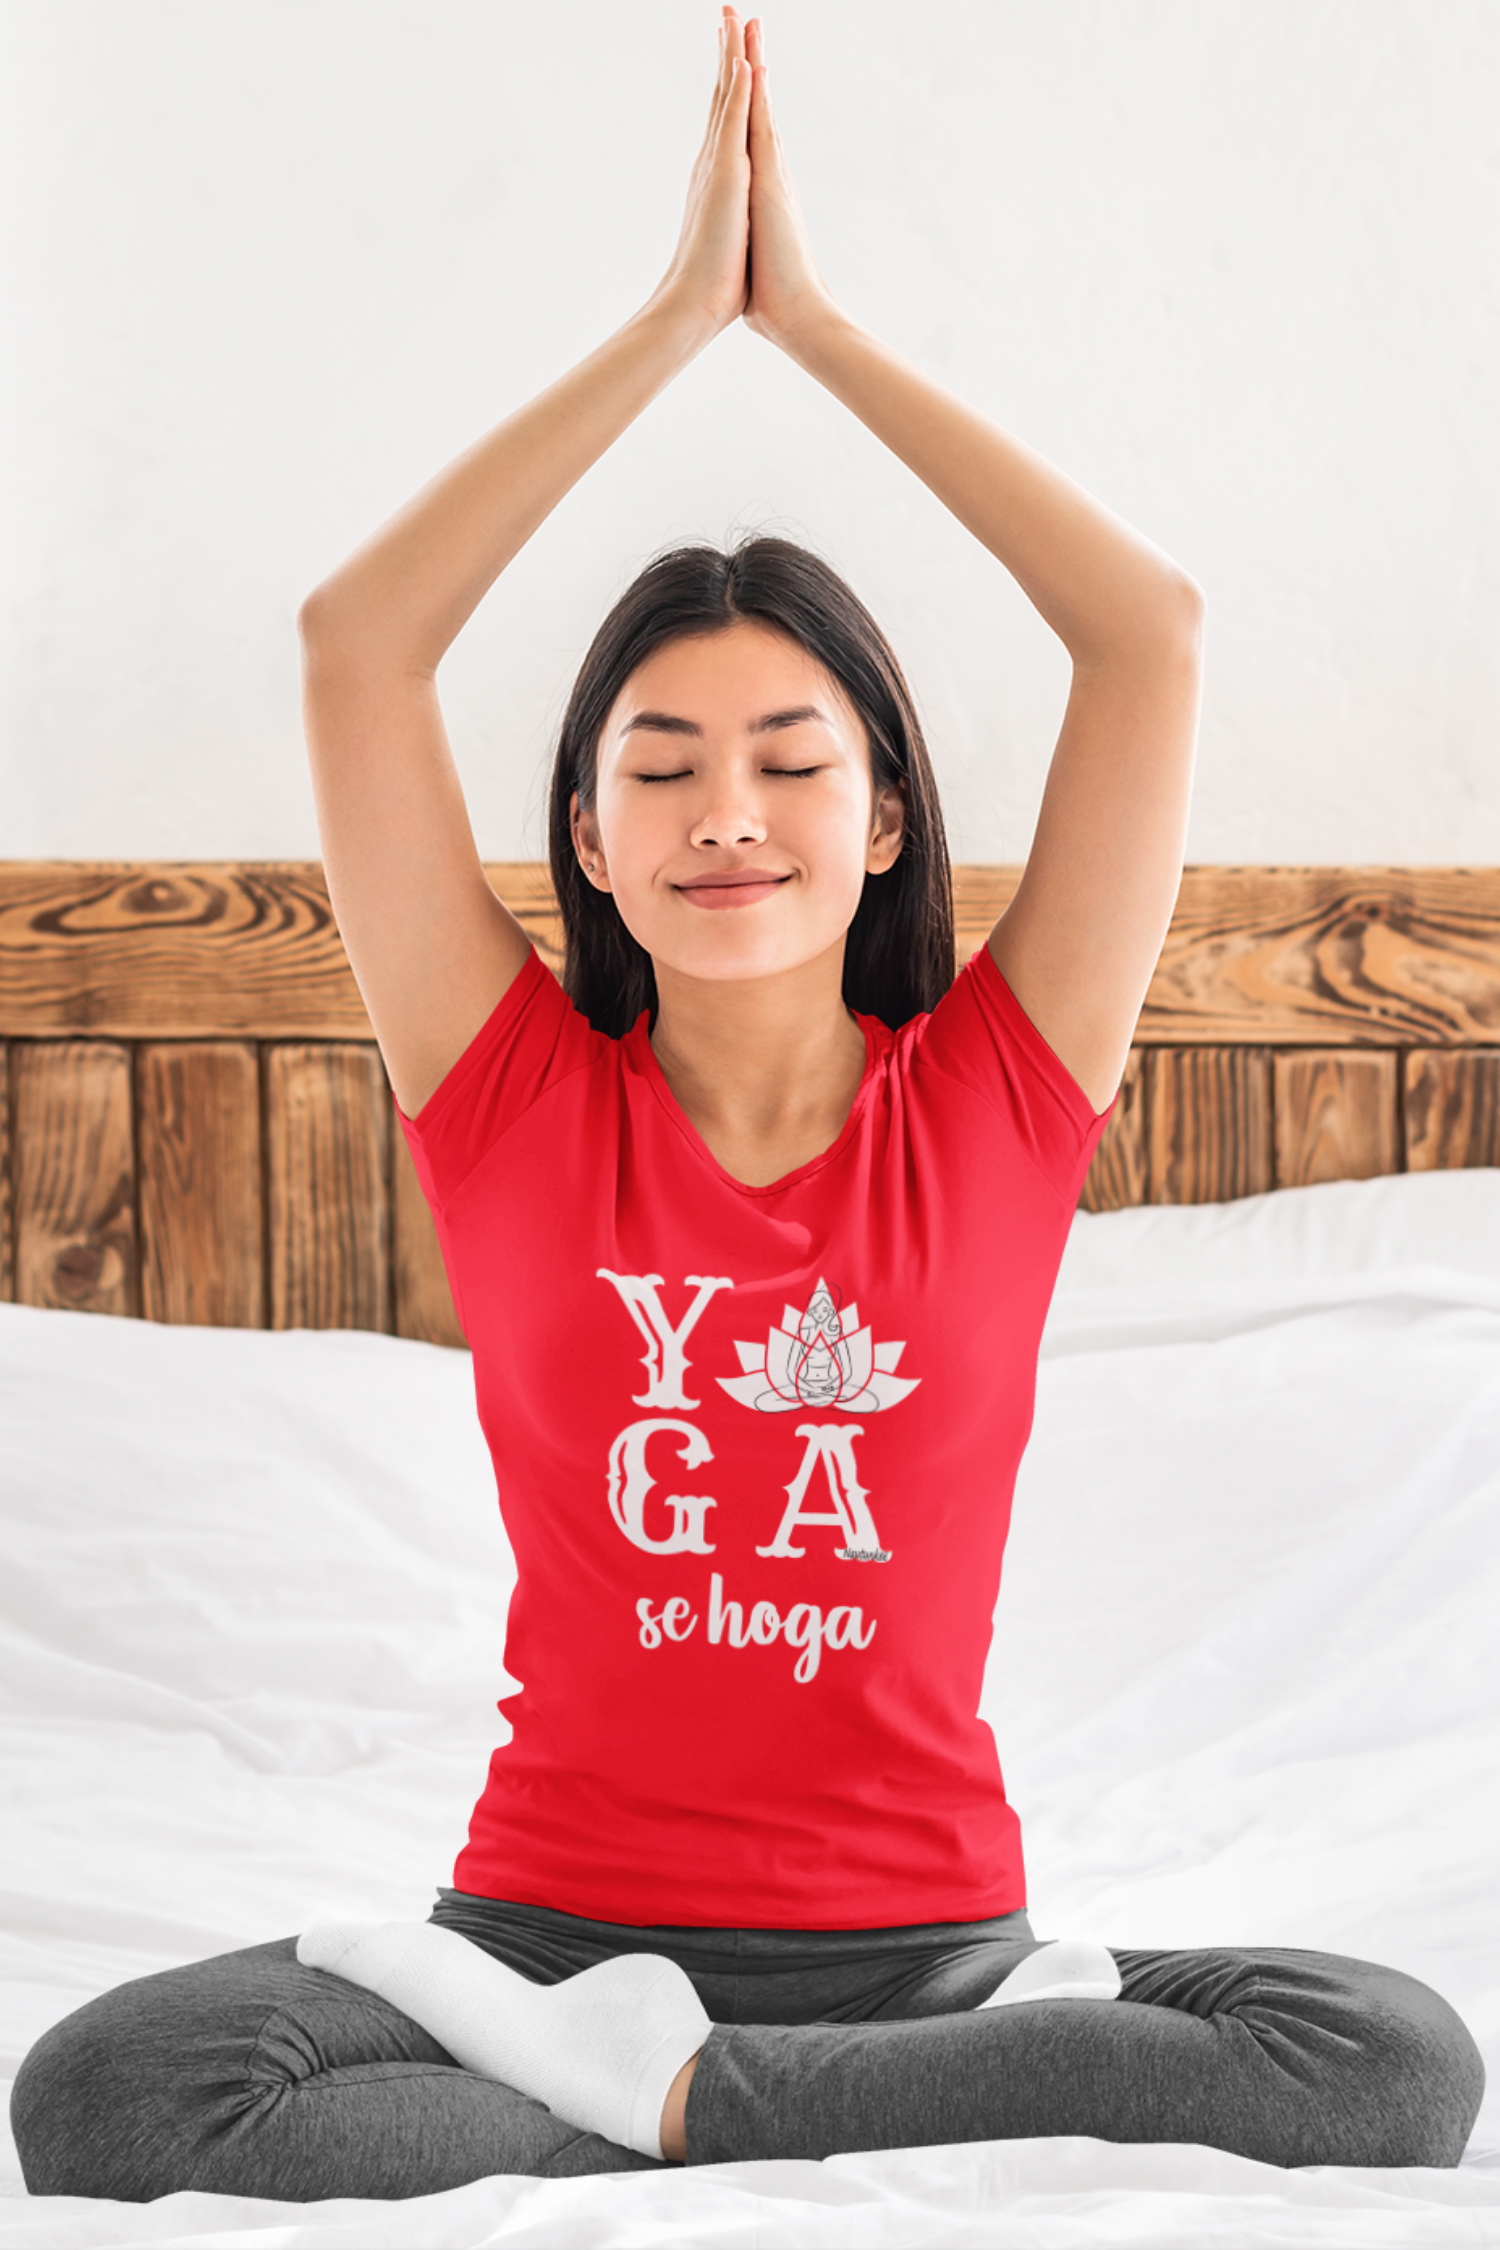 Women's Yoga T-shirts